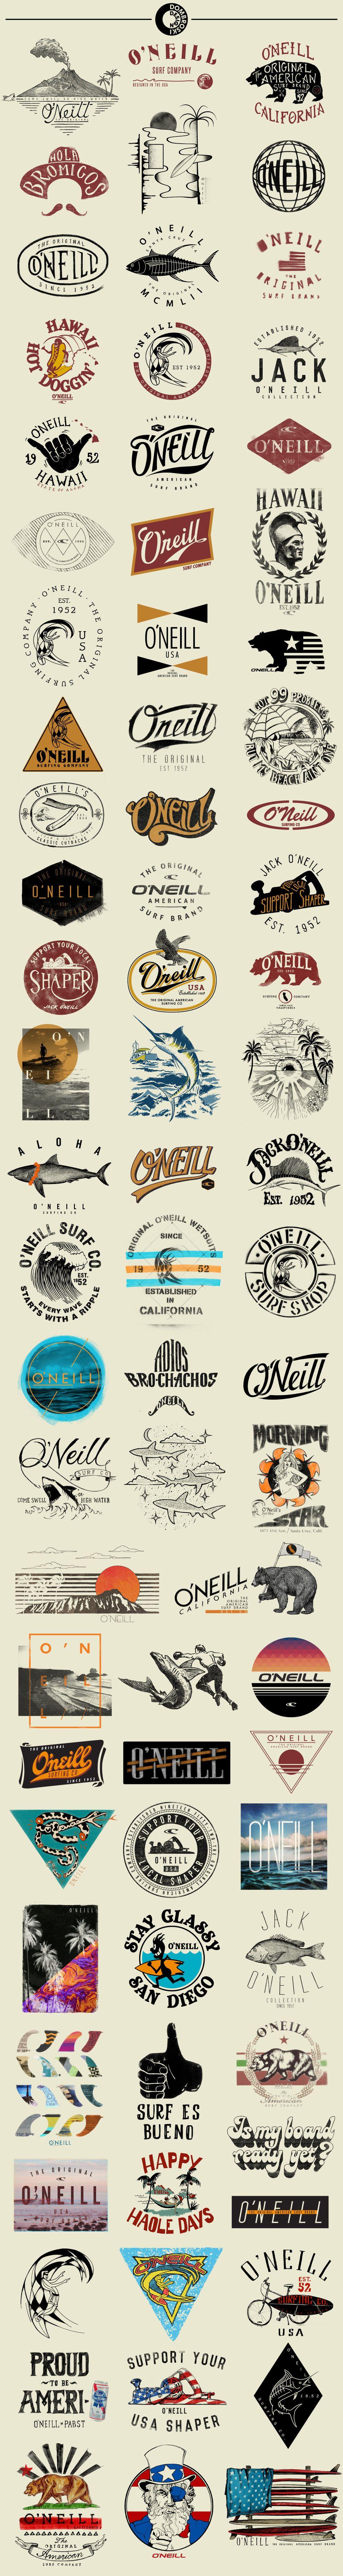 American Surf Company Logo - O'Neill T Shirt Graphics. Graphic Design // Typography